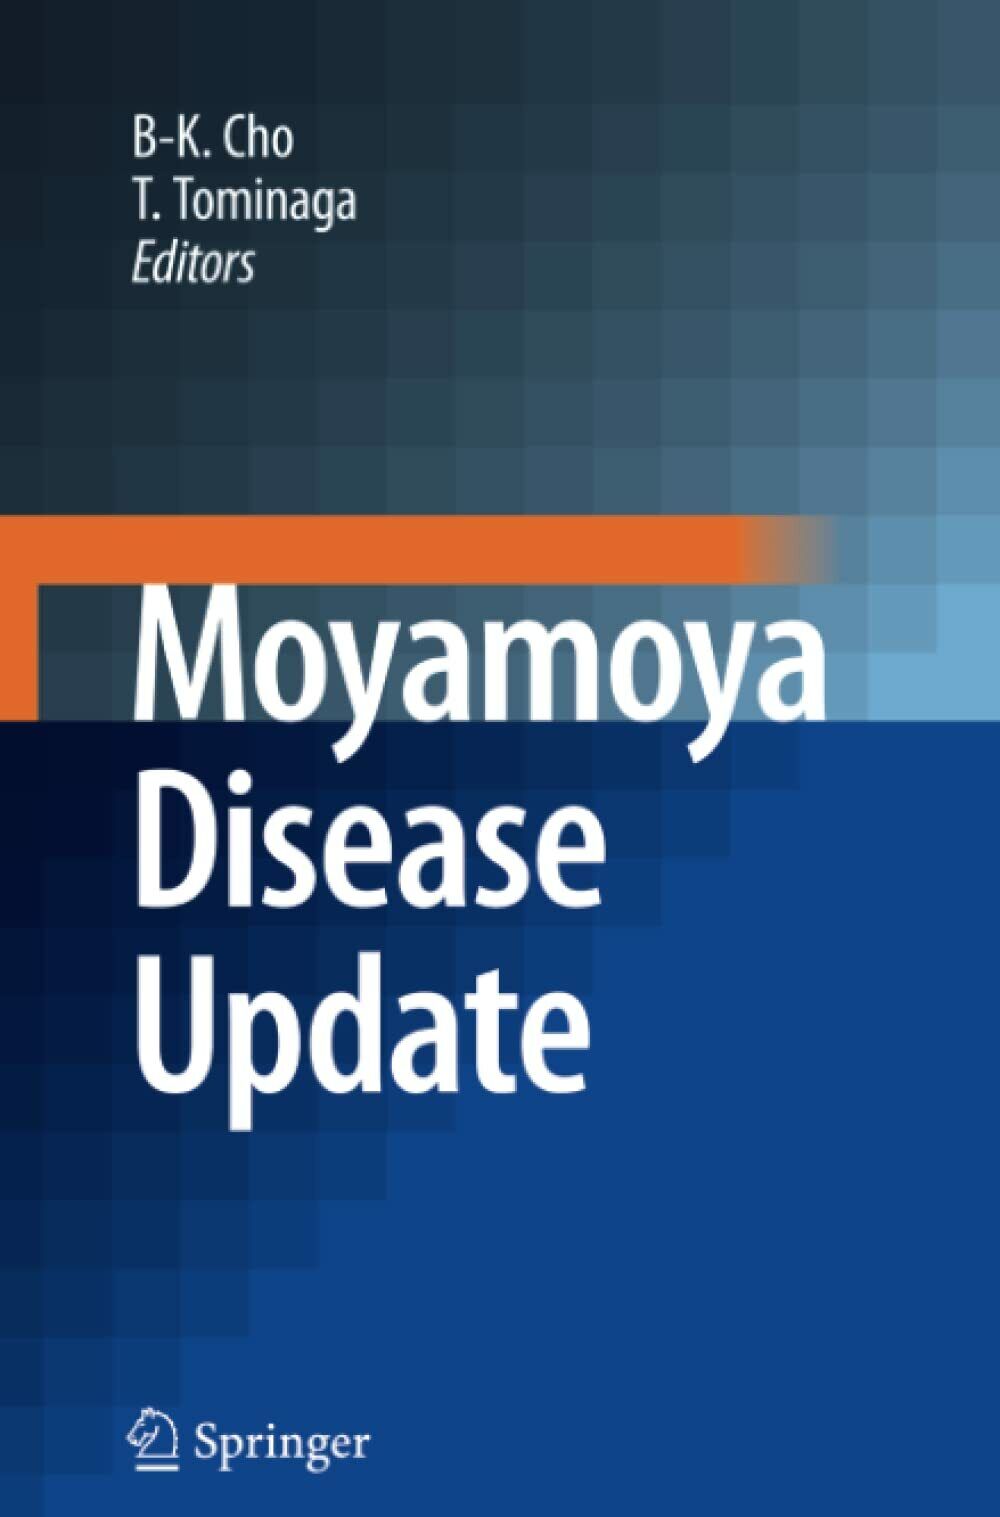 Moyamoya Disease Update - Byung-Kyu Cho  - Springer, 2014